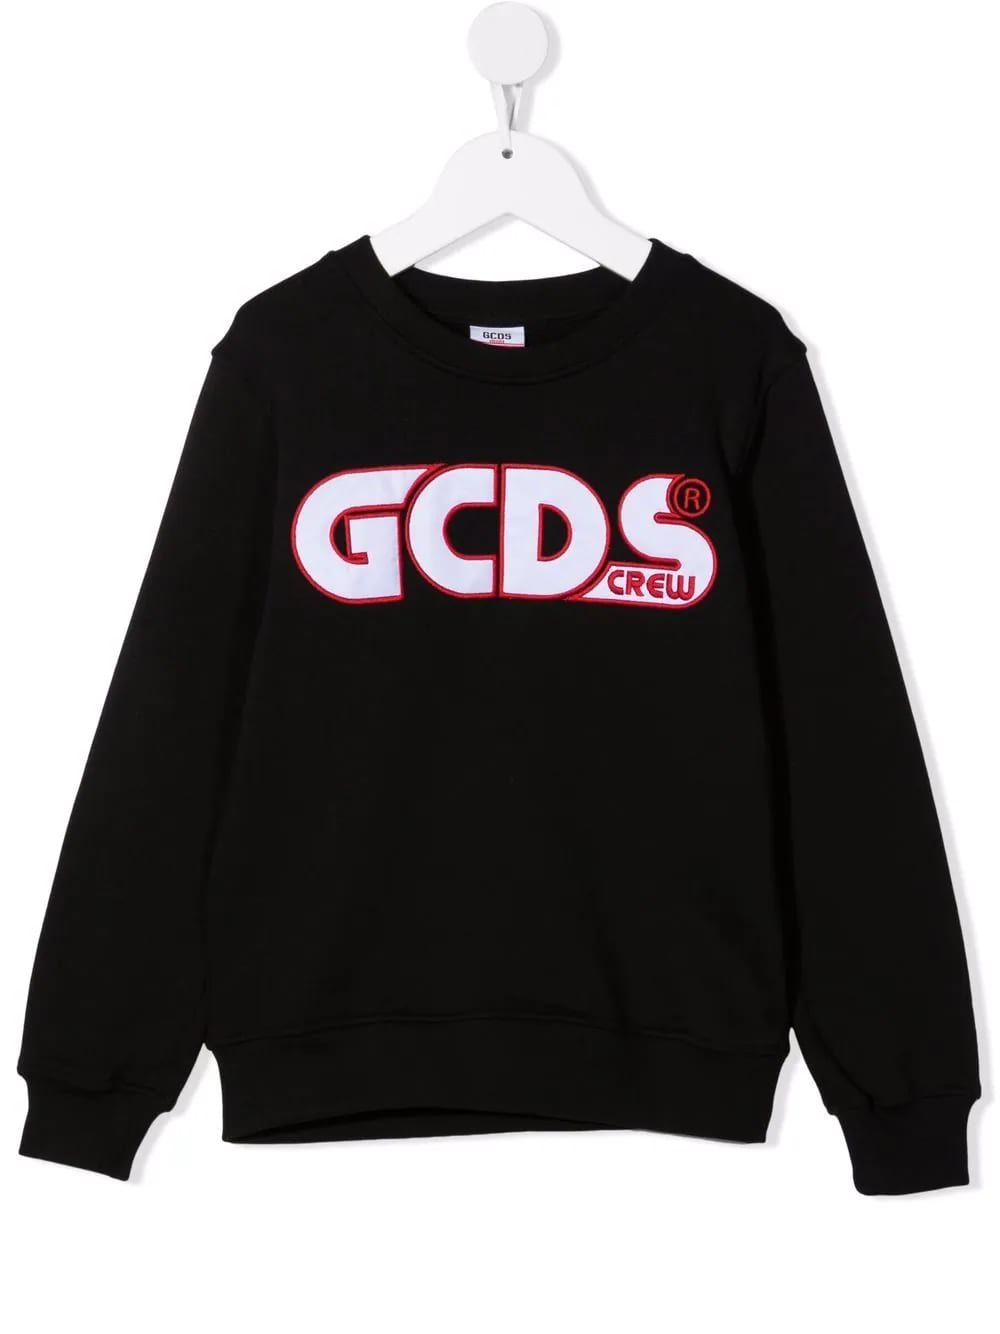 GCDS Mini Kids Black Sweatshirt With Red Profiled Logo